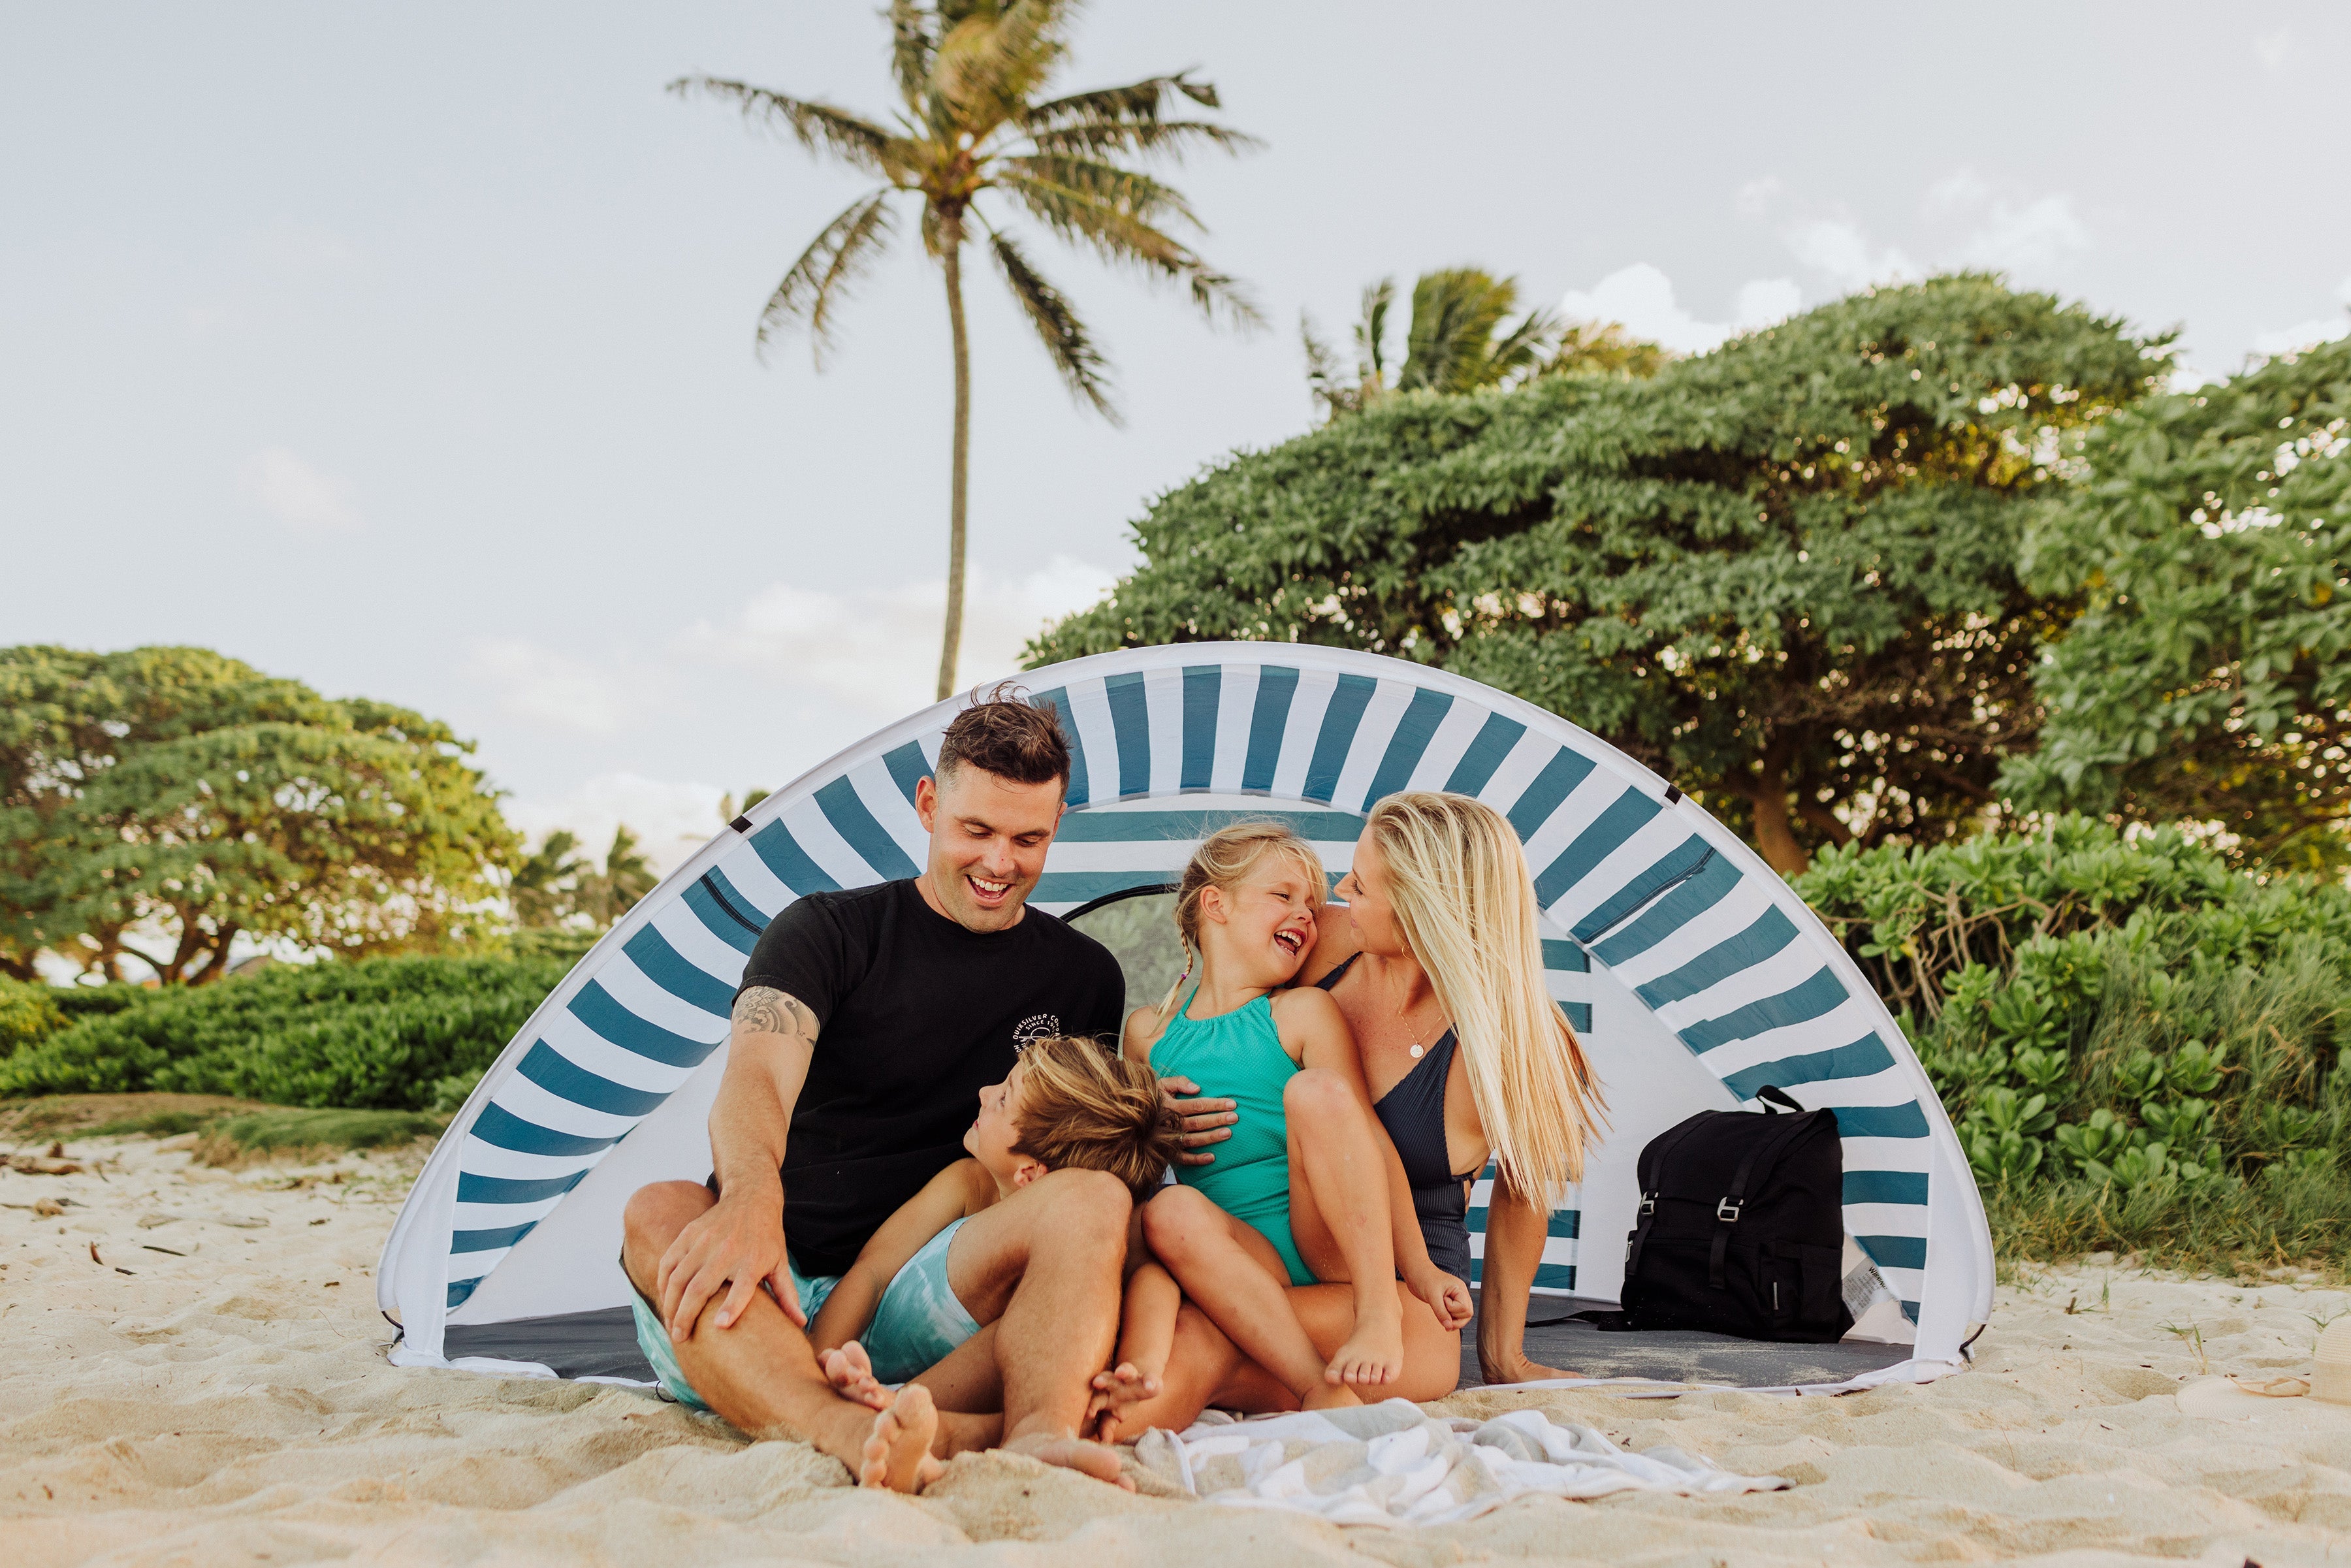 Beach Sayings All I Need is Vitamin Sea - Manta Portable Beach Tent